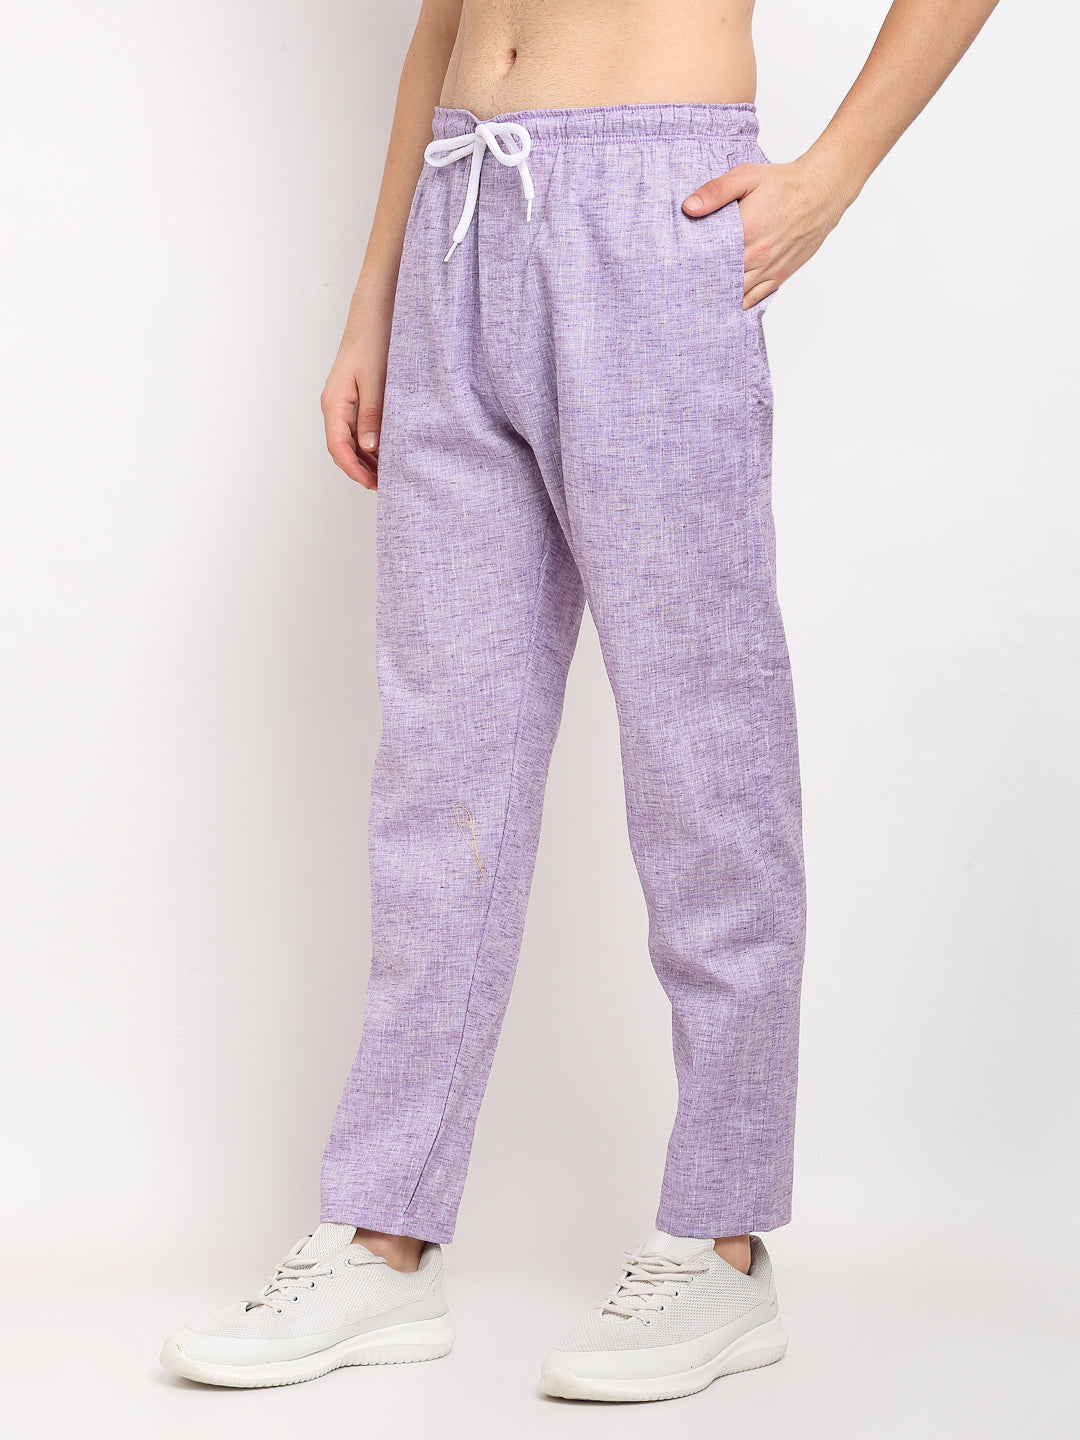 Men's Purple Linen Cotton Track Pants ( JOG 021Purple ) - Jainish